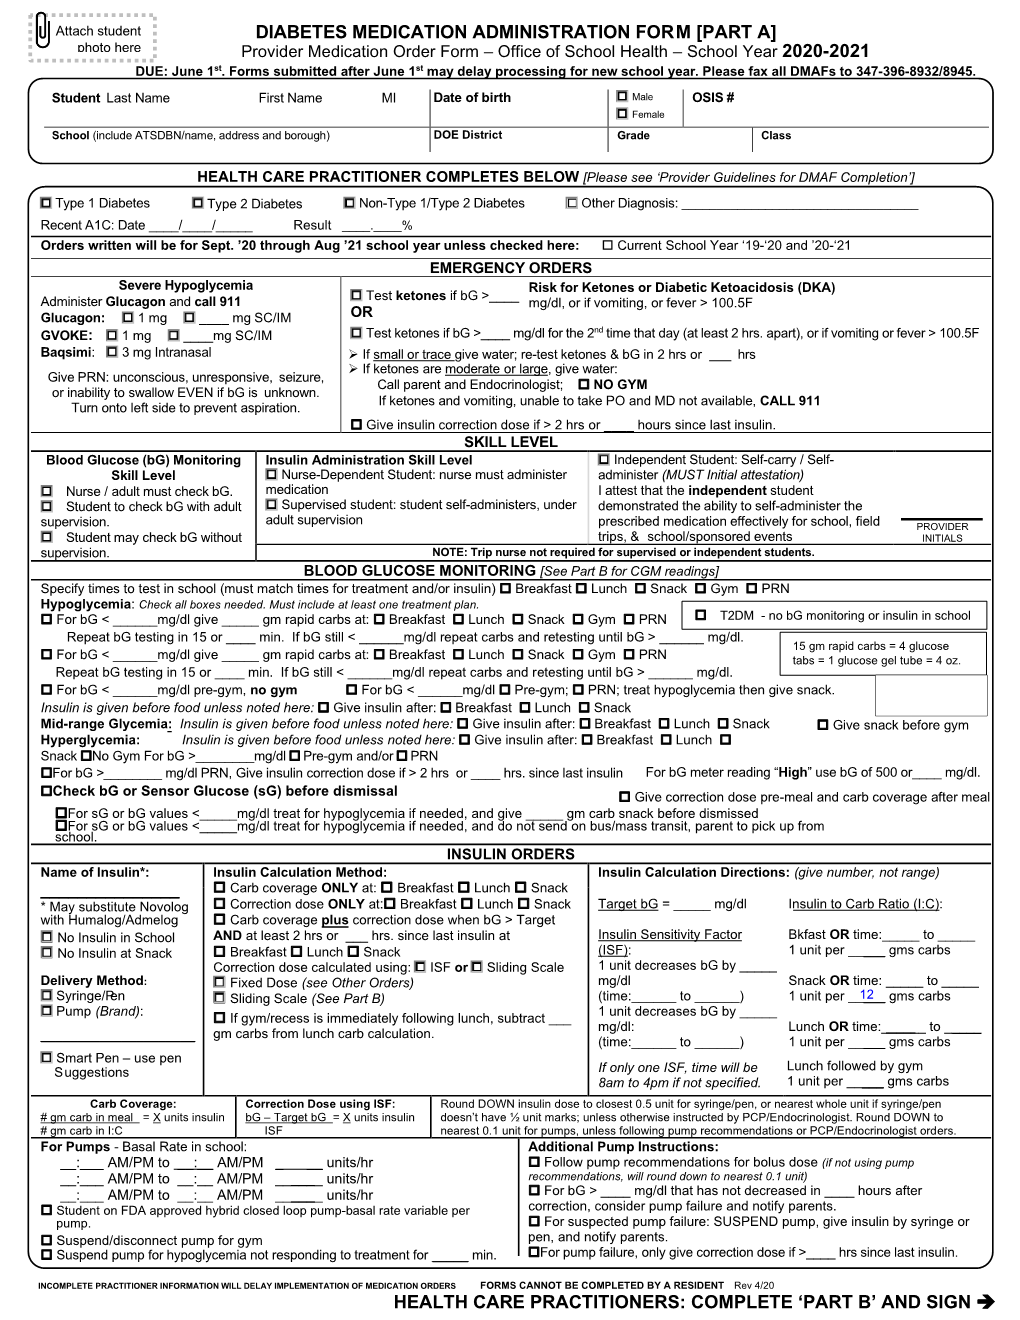 Diabetes Medication Administration Form [Part A]